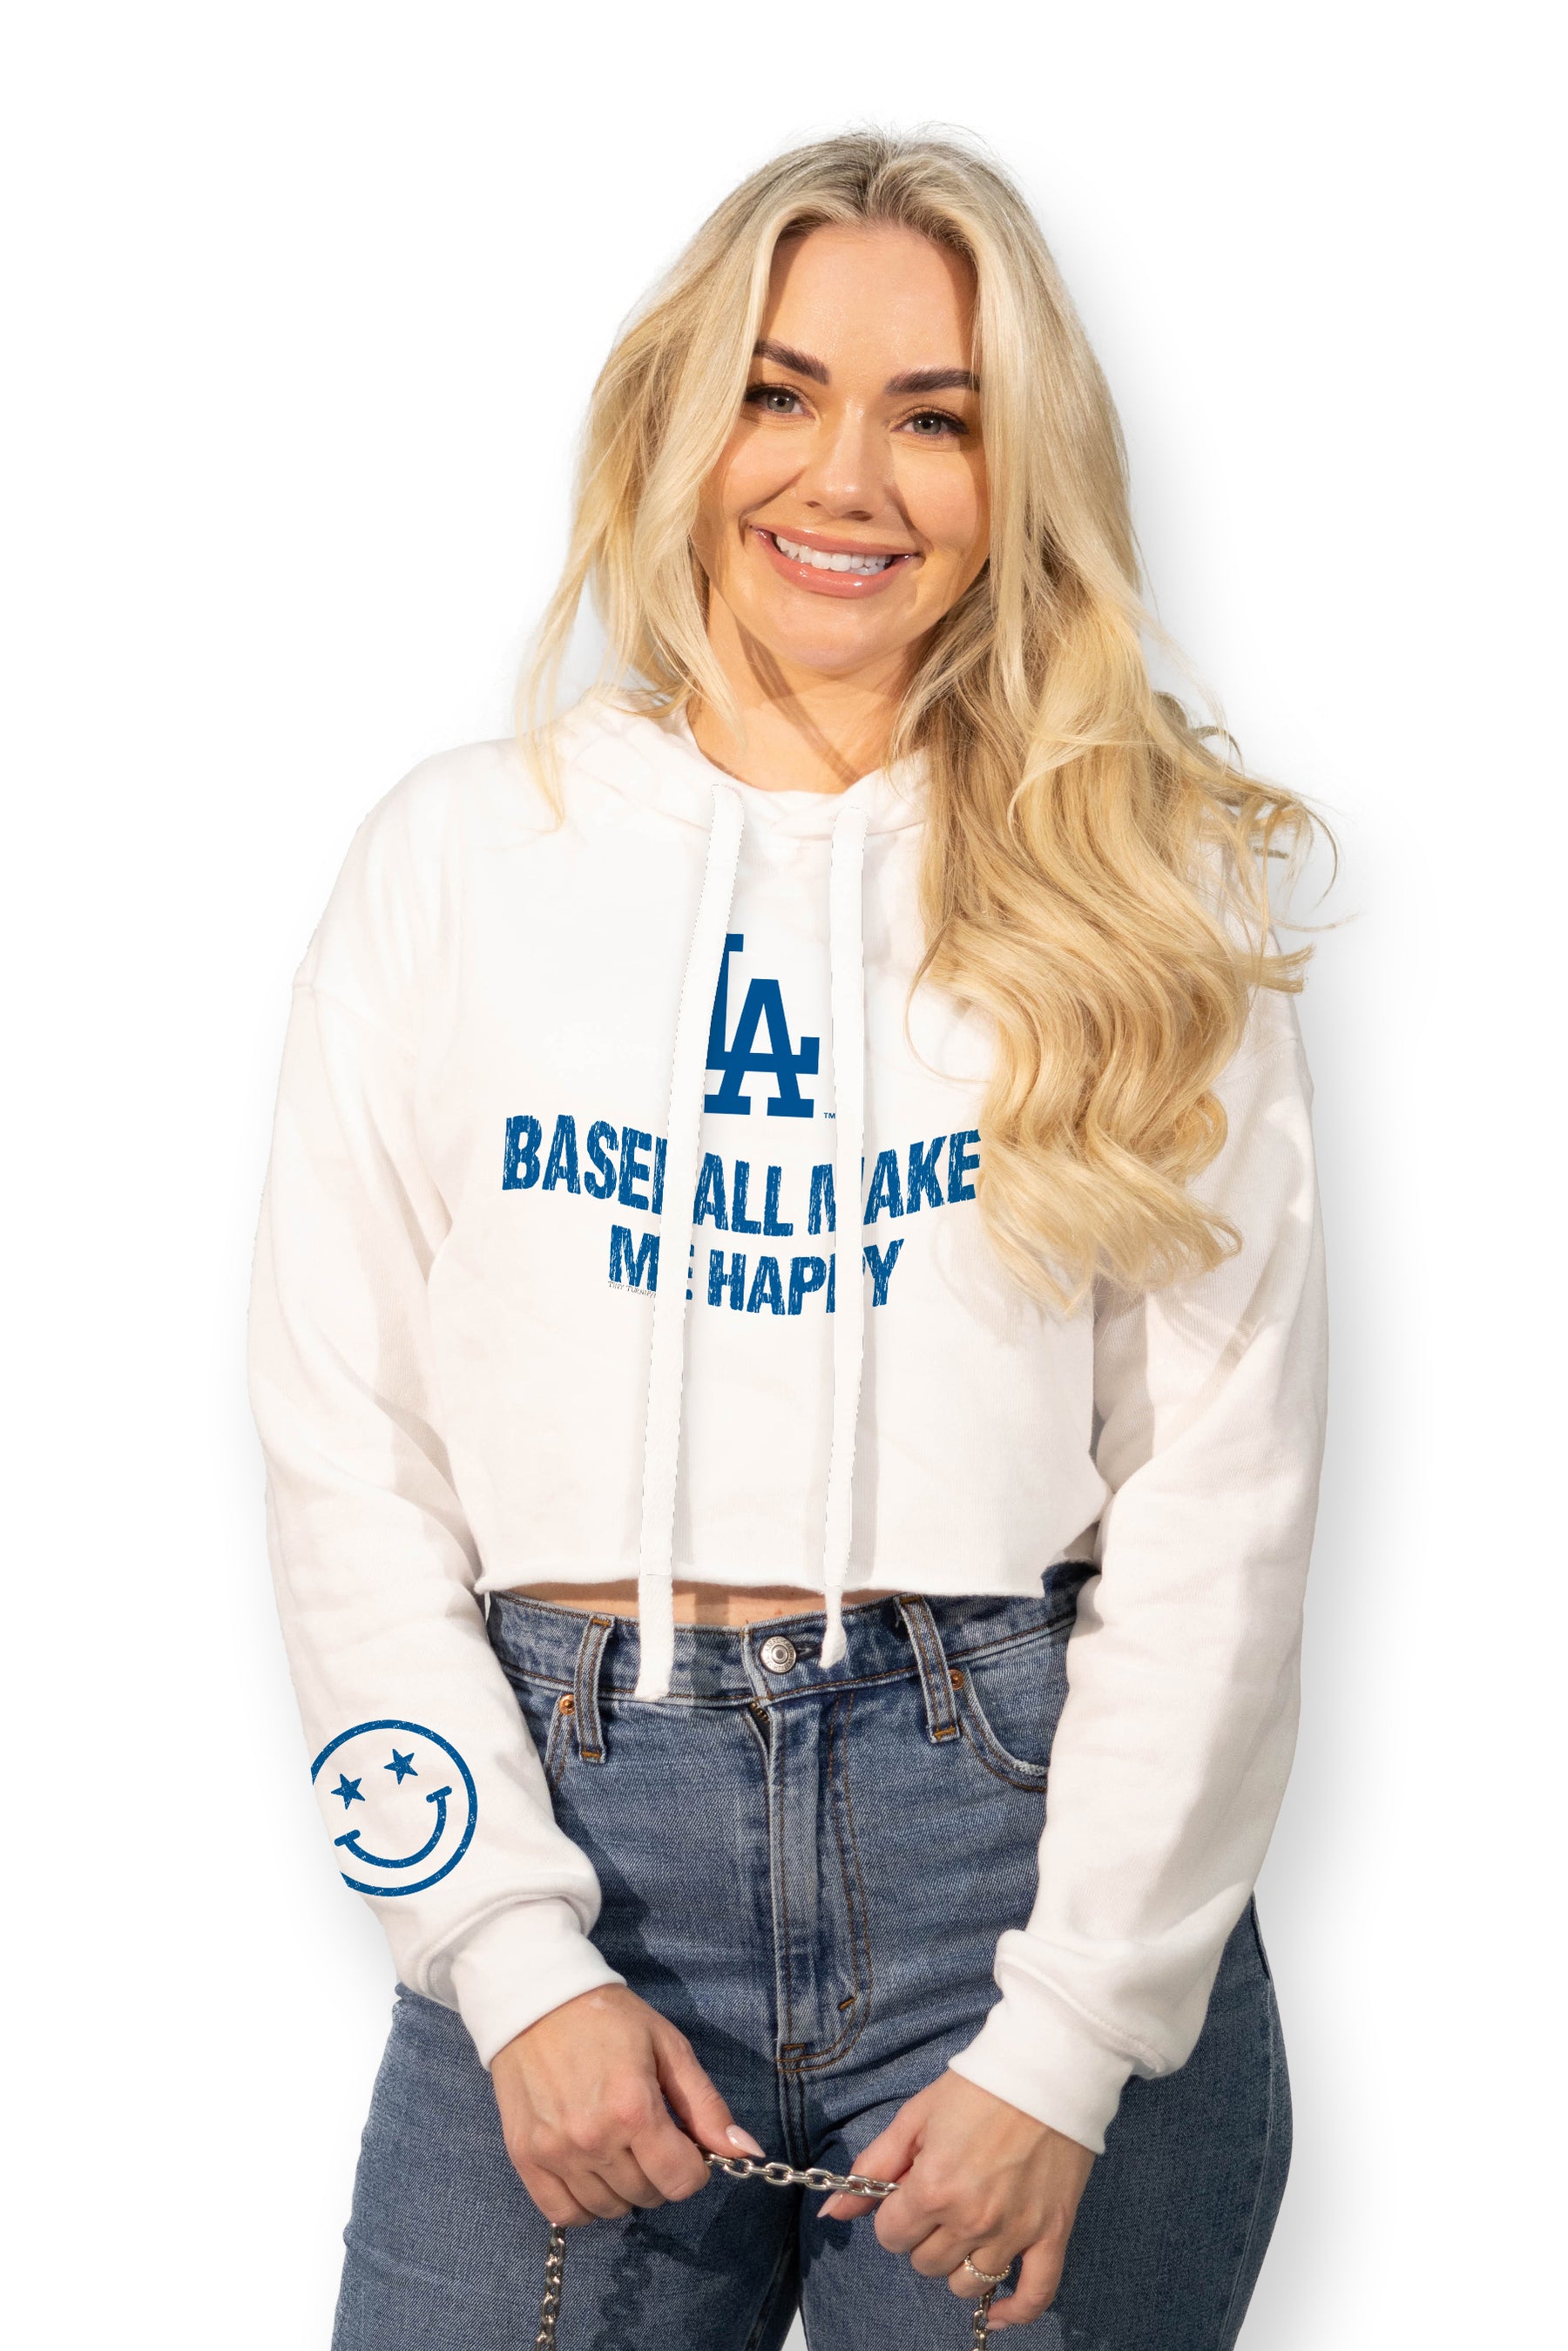 LA Dodgers MLB City Connect Grey Hoodie